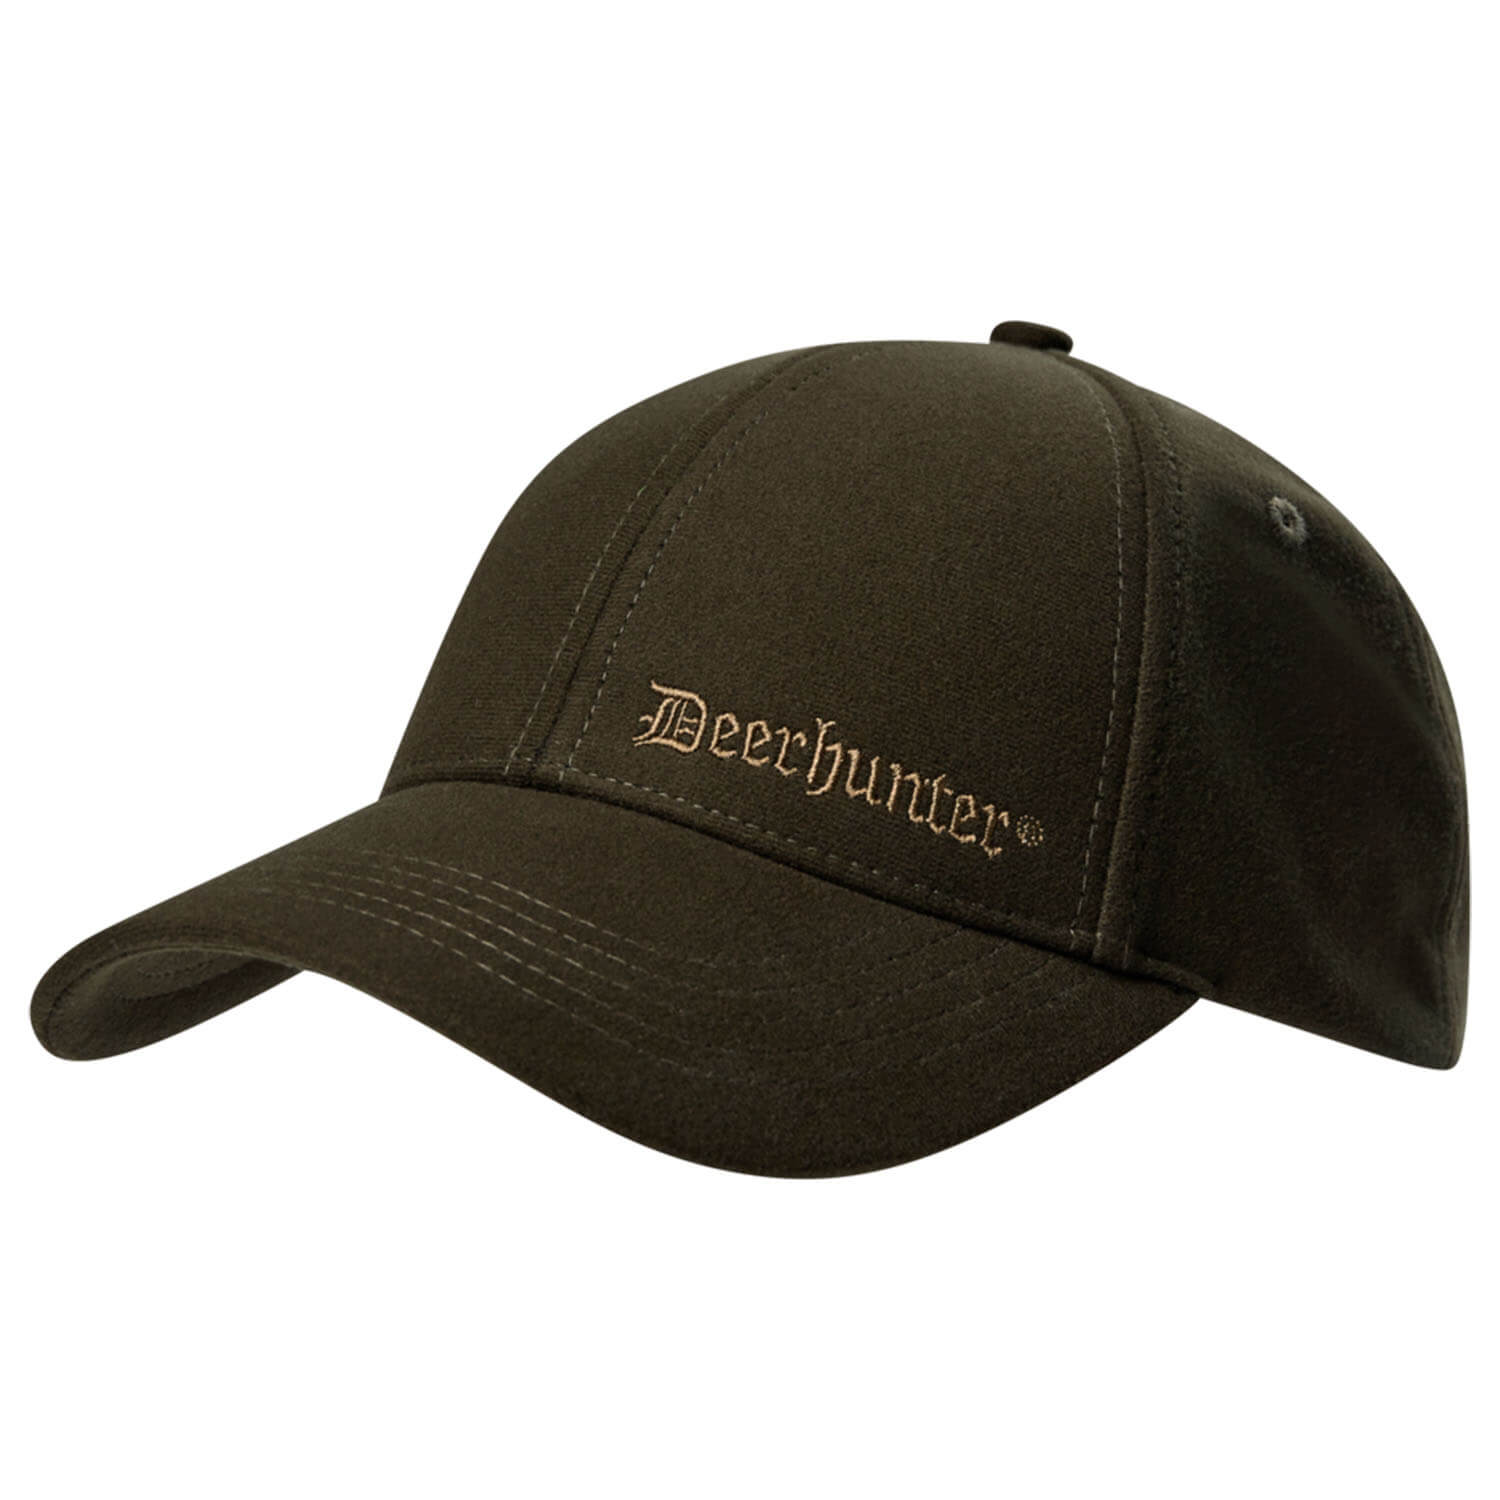 Deerhunter cap game (wood) - Winter Hunting Clothing